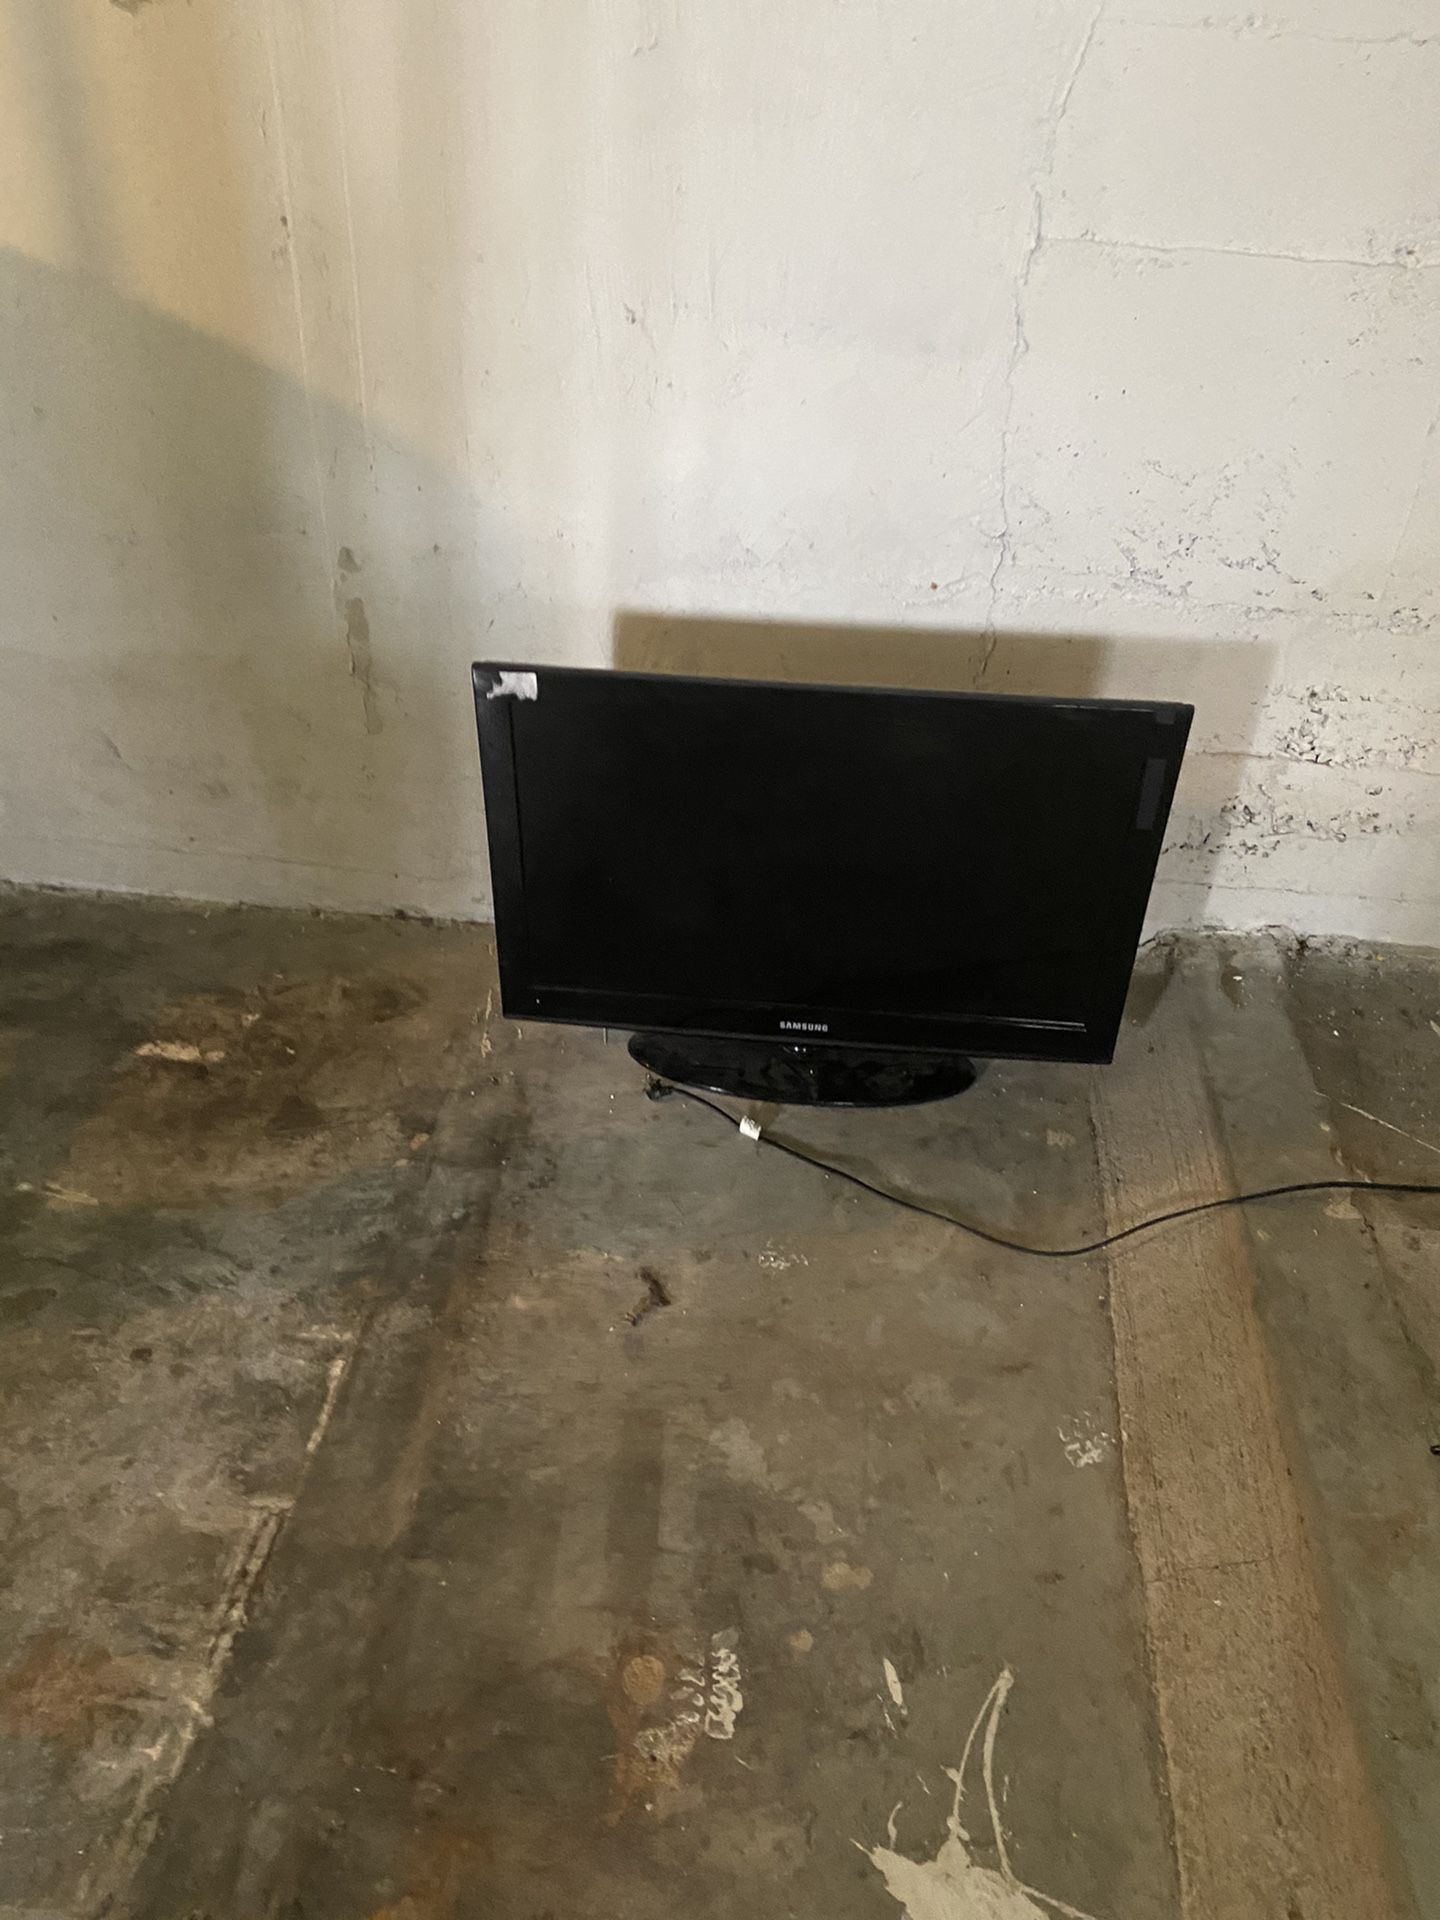 32” inch tv